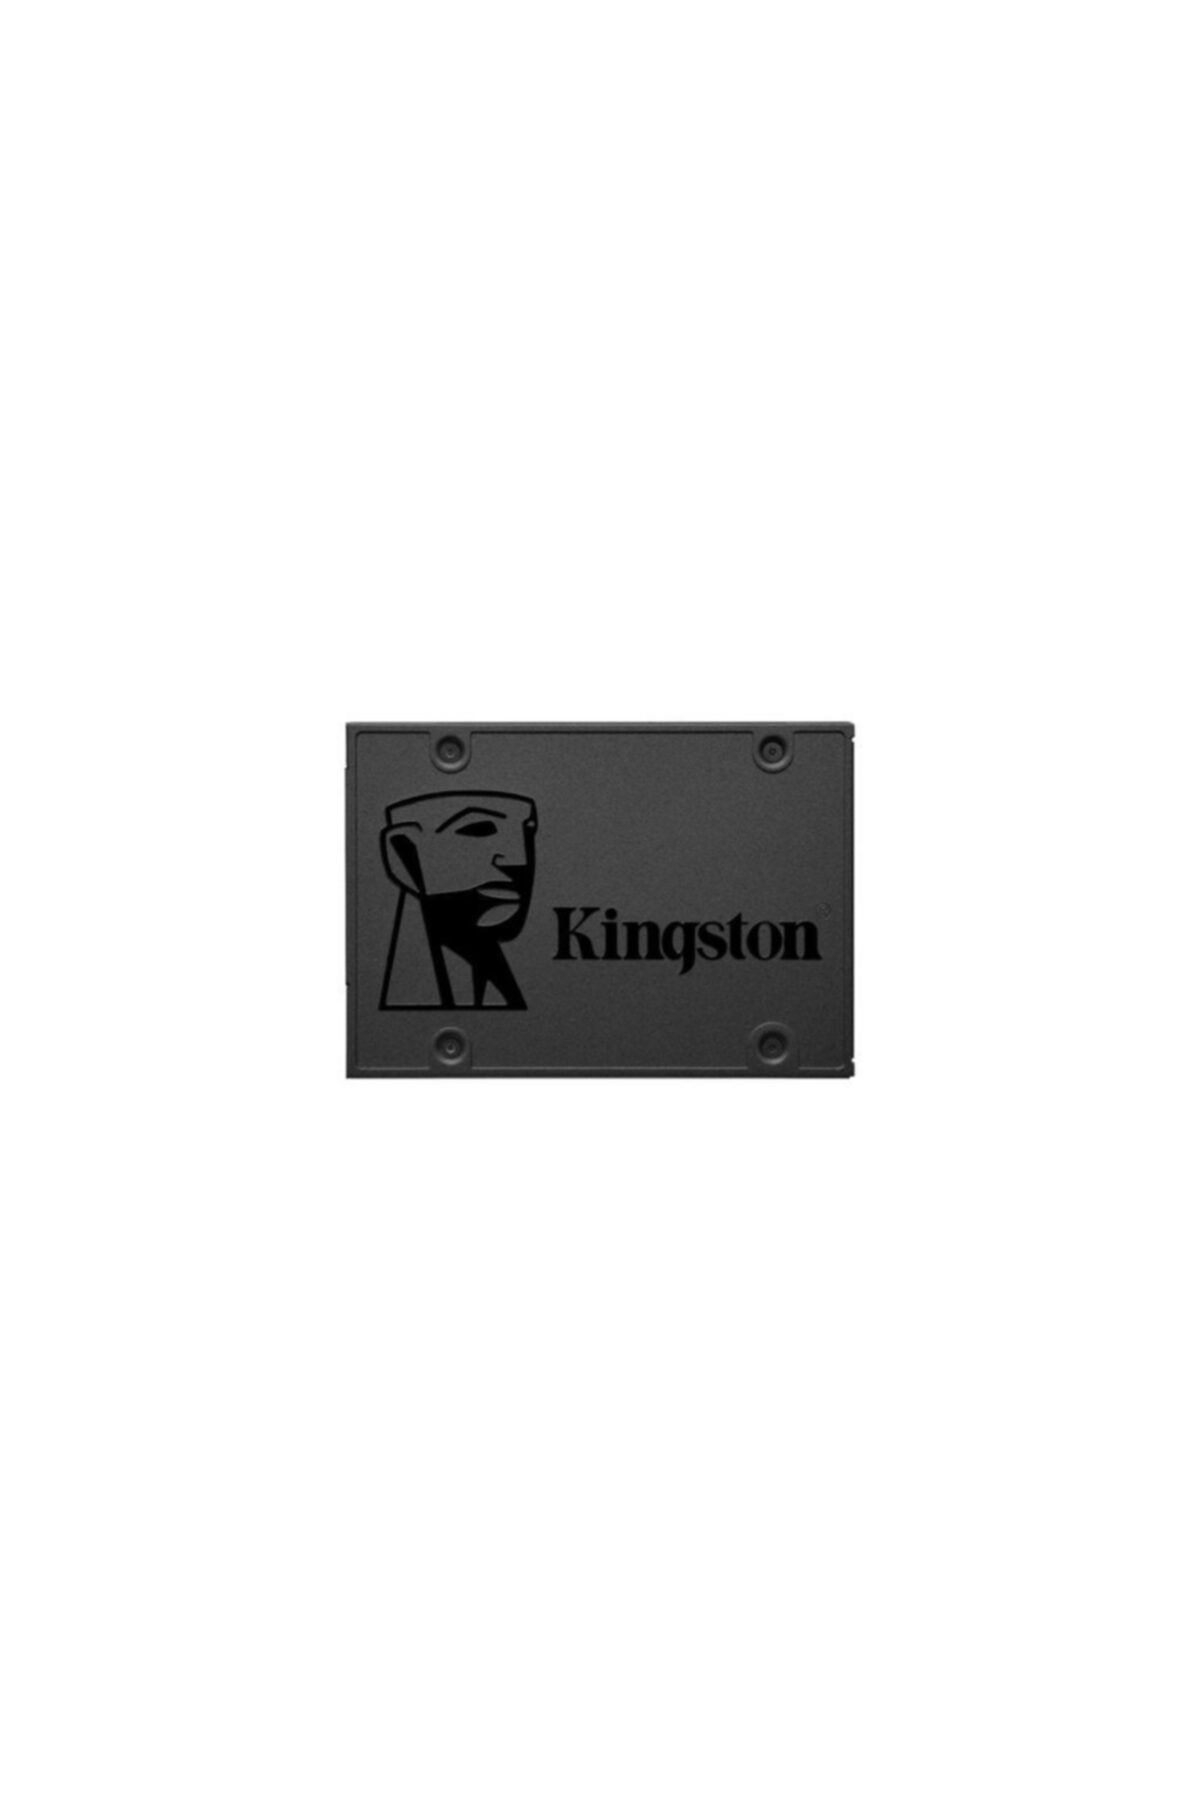 Kingston A400 Ssdnow 480gb 2.5" 500mb/450mb/s Sata3 Ssd Disk - Sa400s37/480g